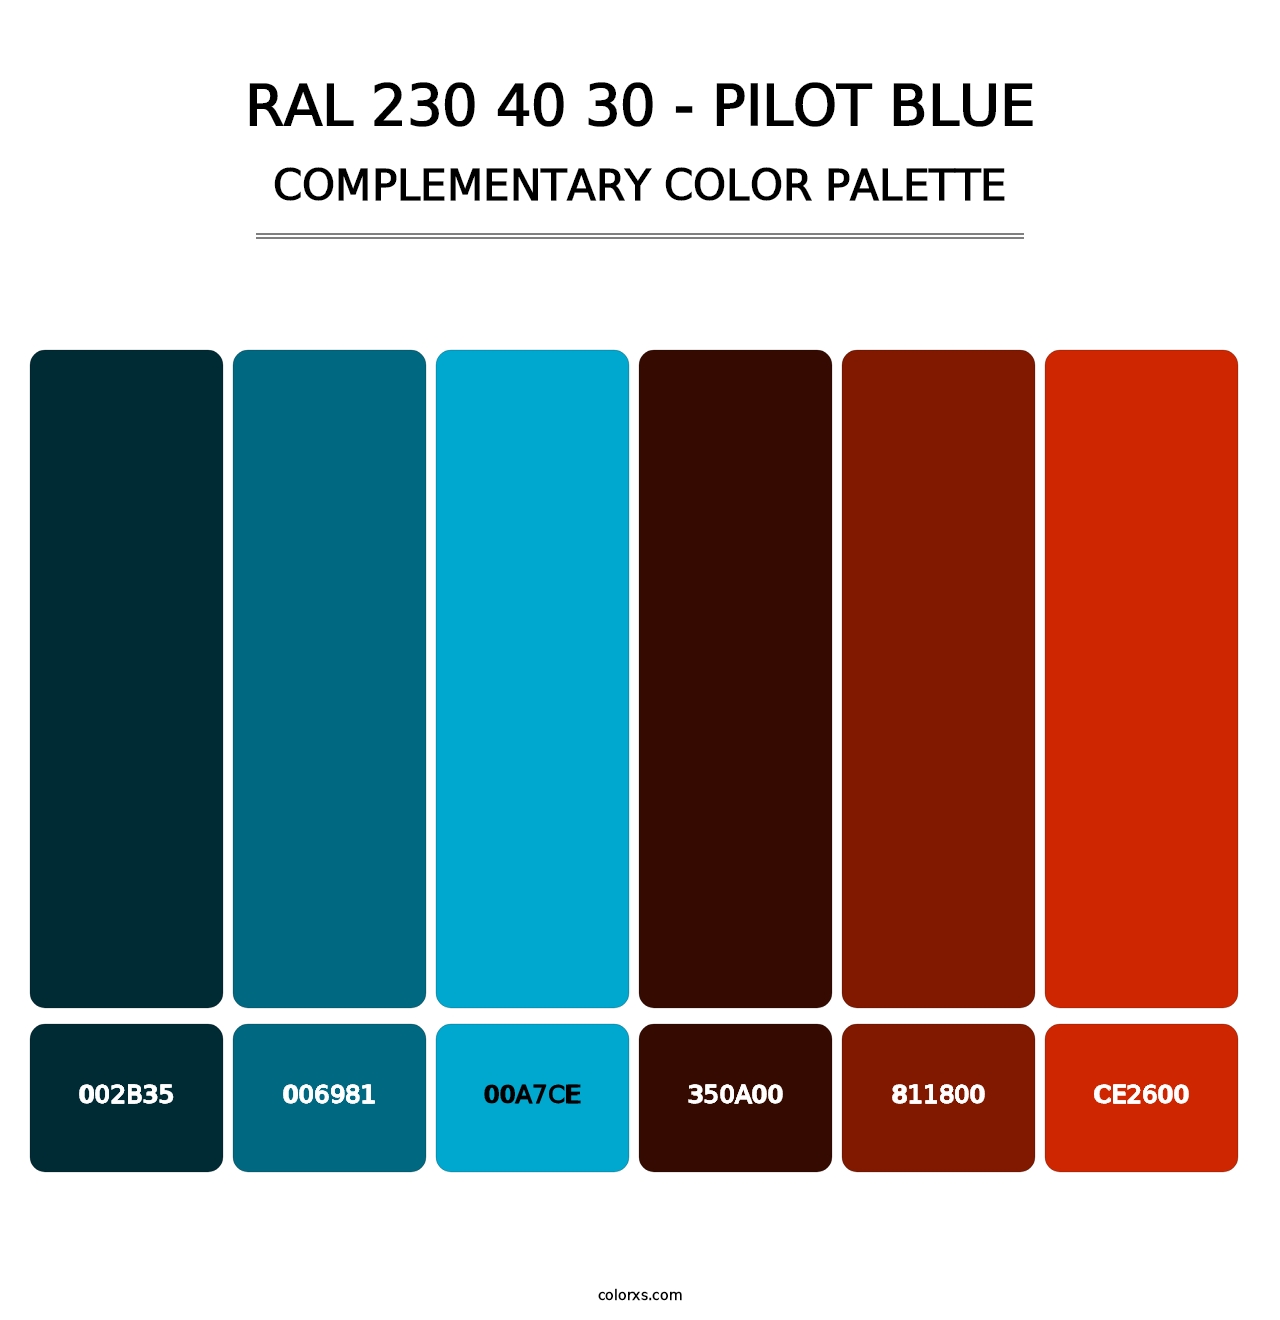 RAL 230 40 30 - Pilot Blue - Complementary Color Palette